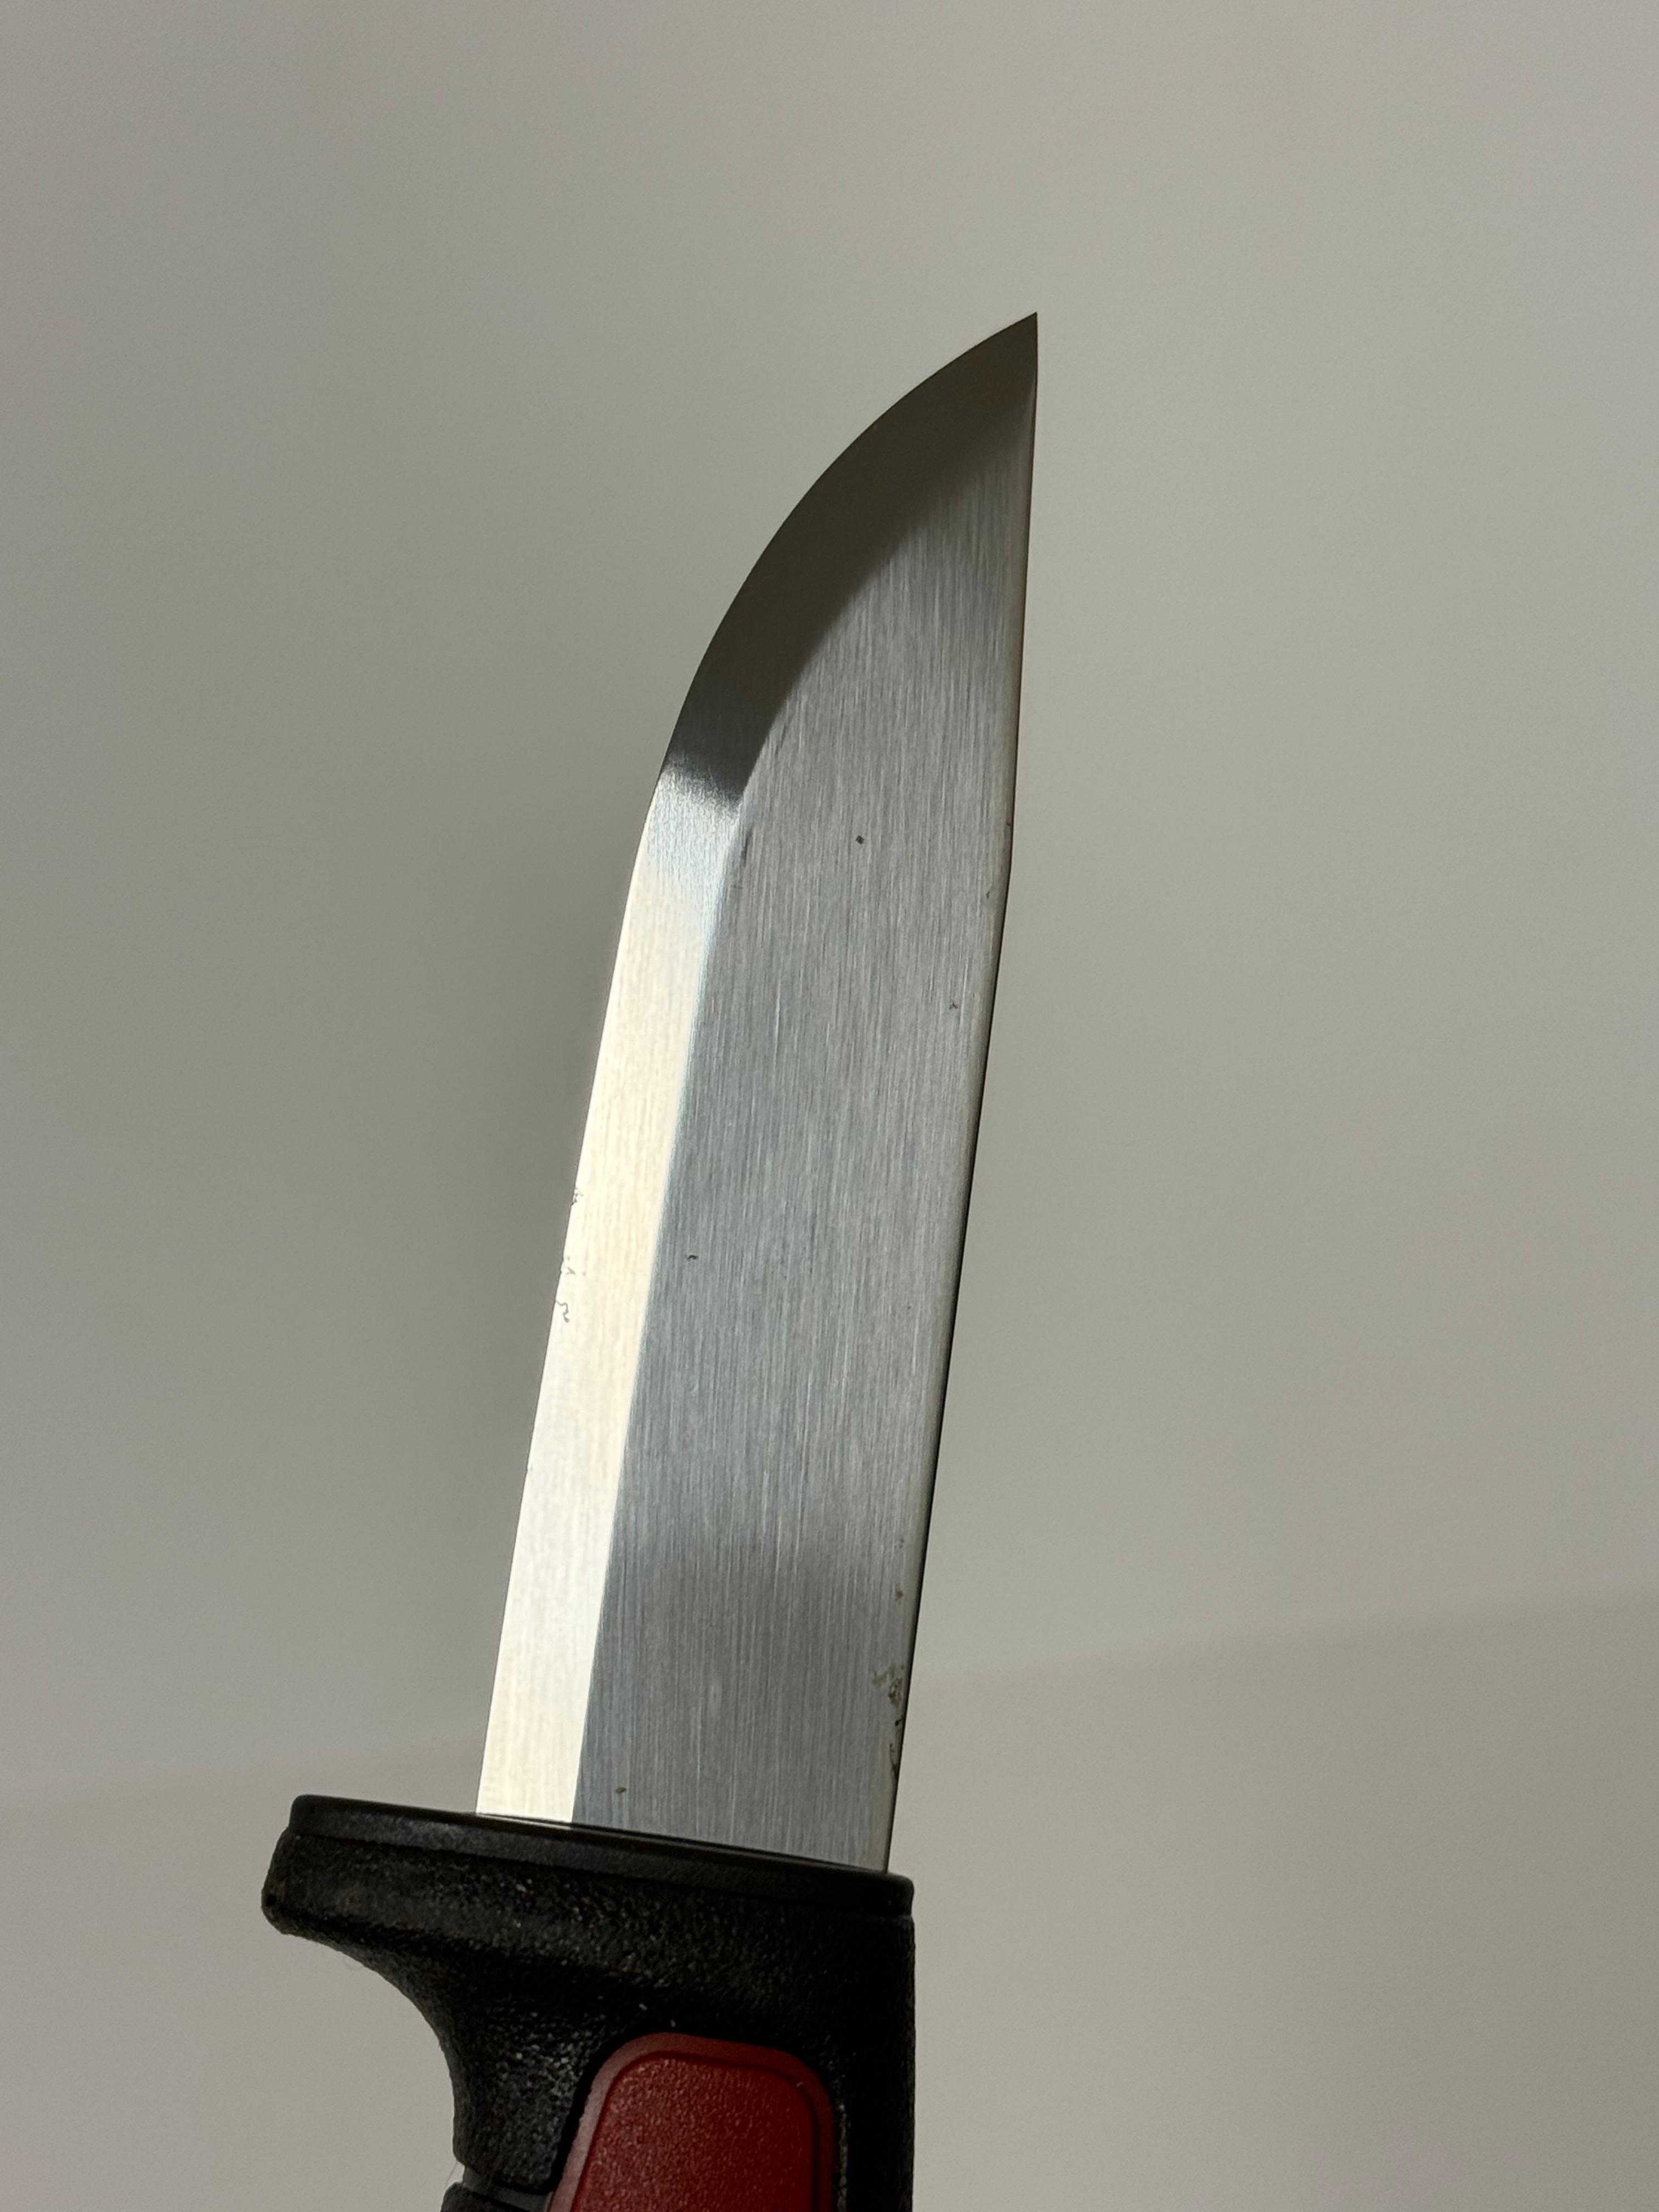 New Morakniv Pro C Fixed-Blade Carbon Steel Knife with Sheathe 